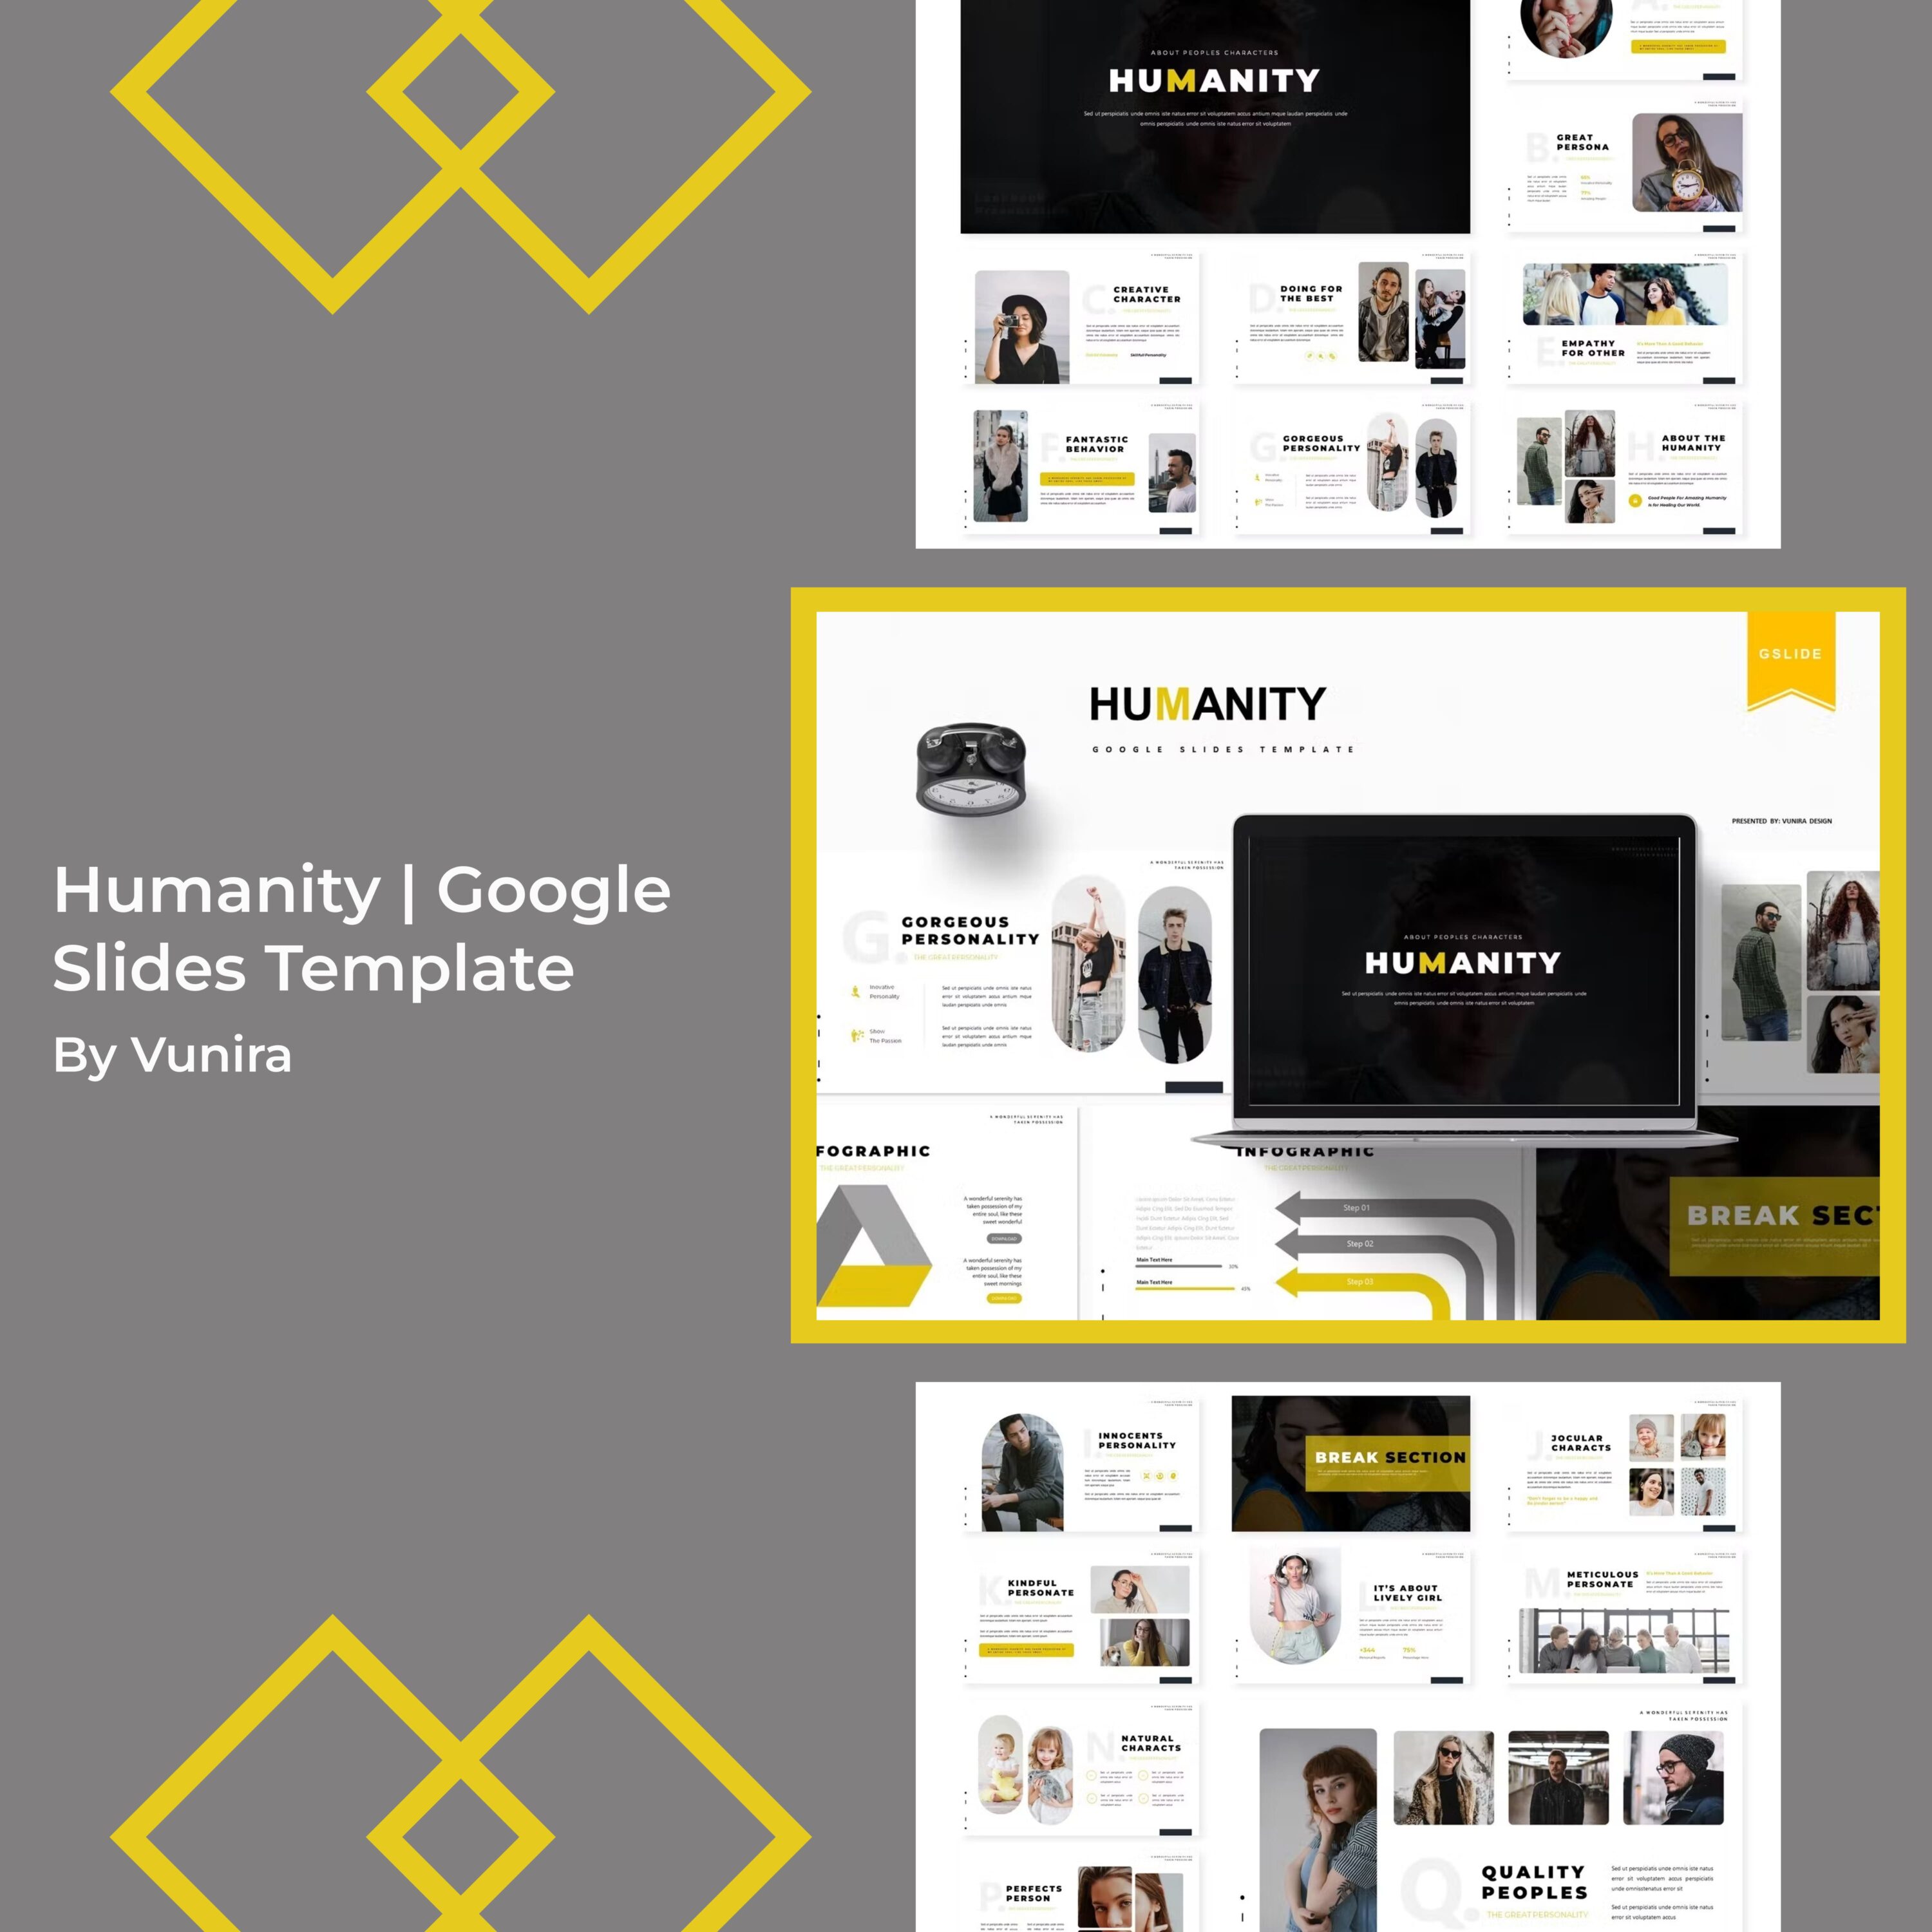 Humanity | Google Slides Template.